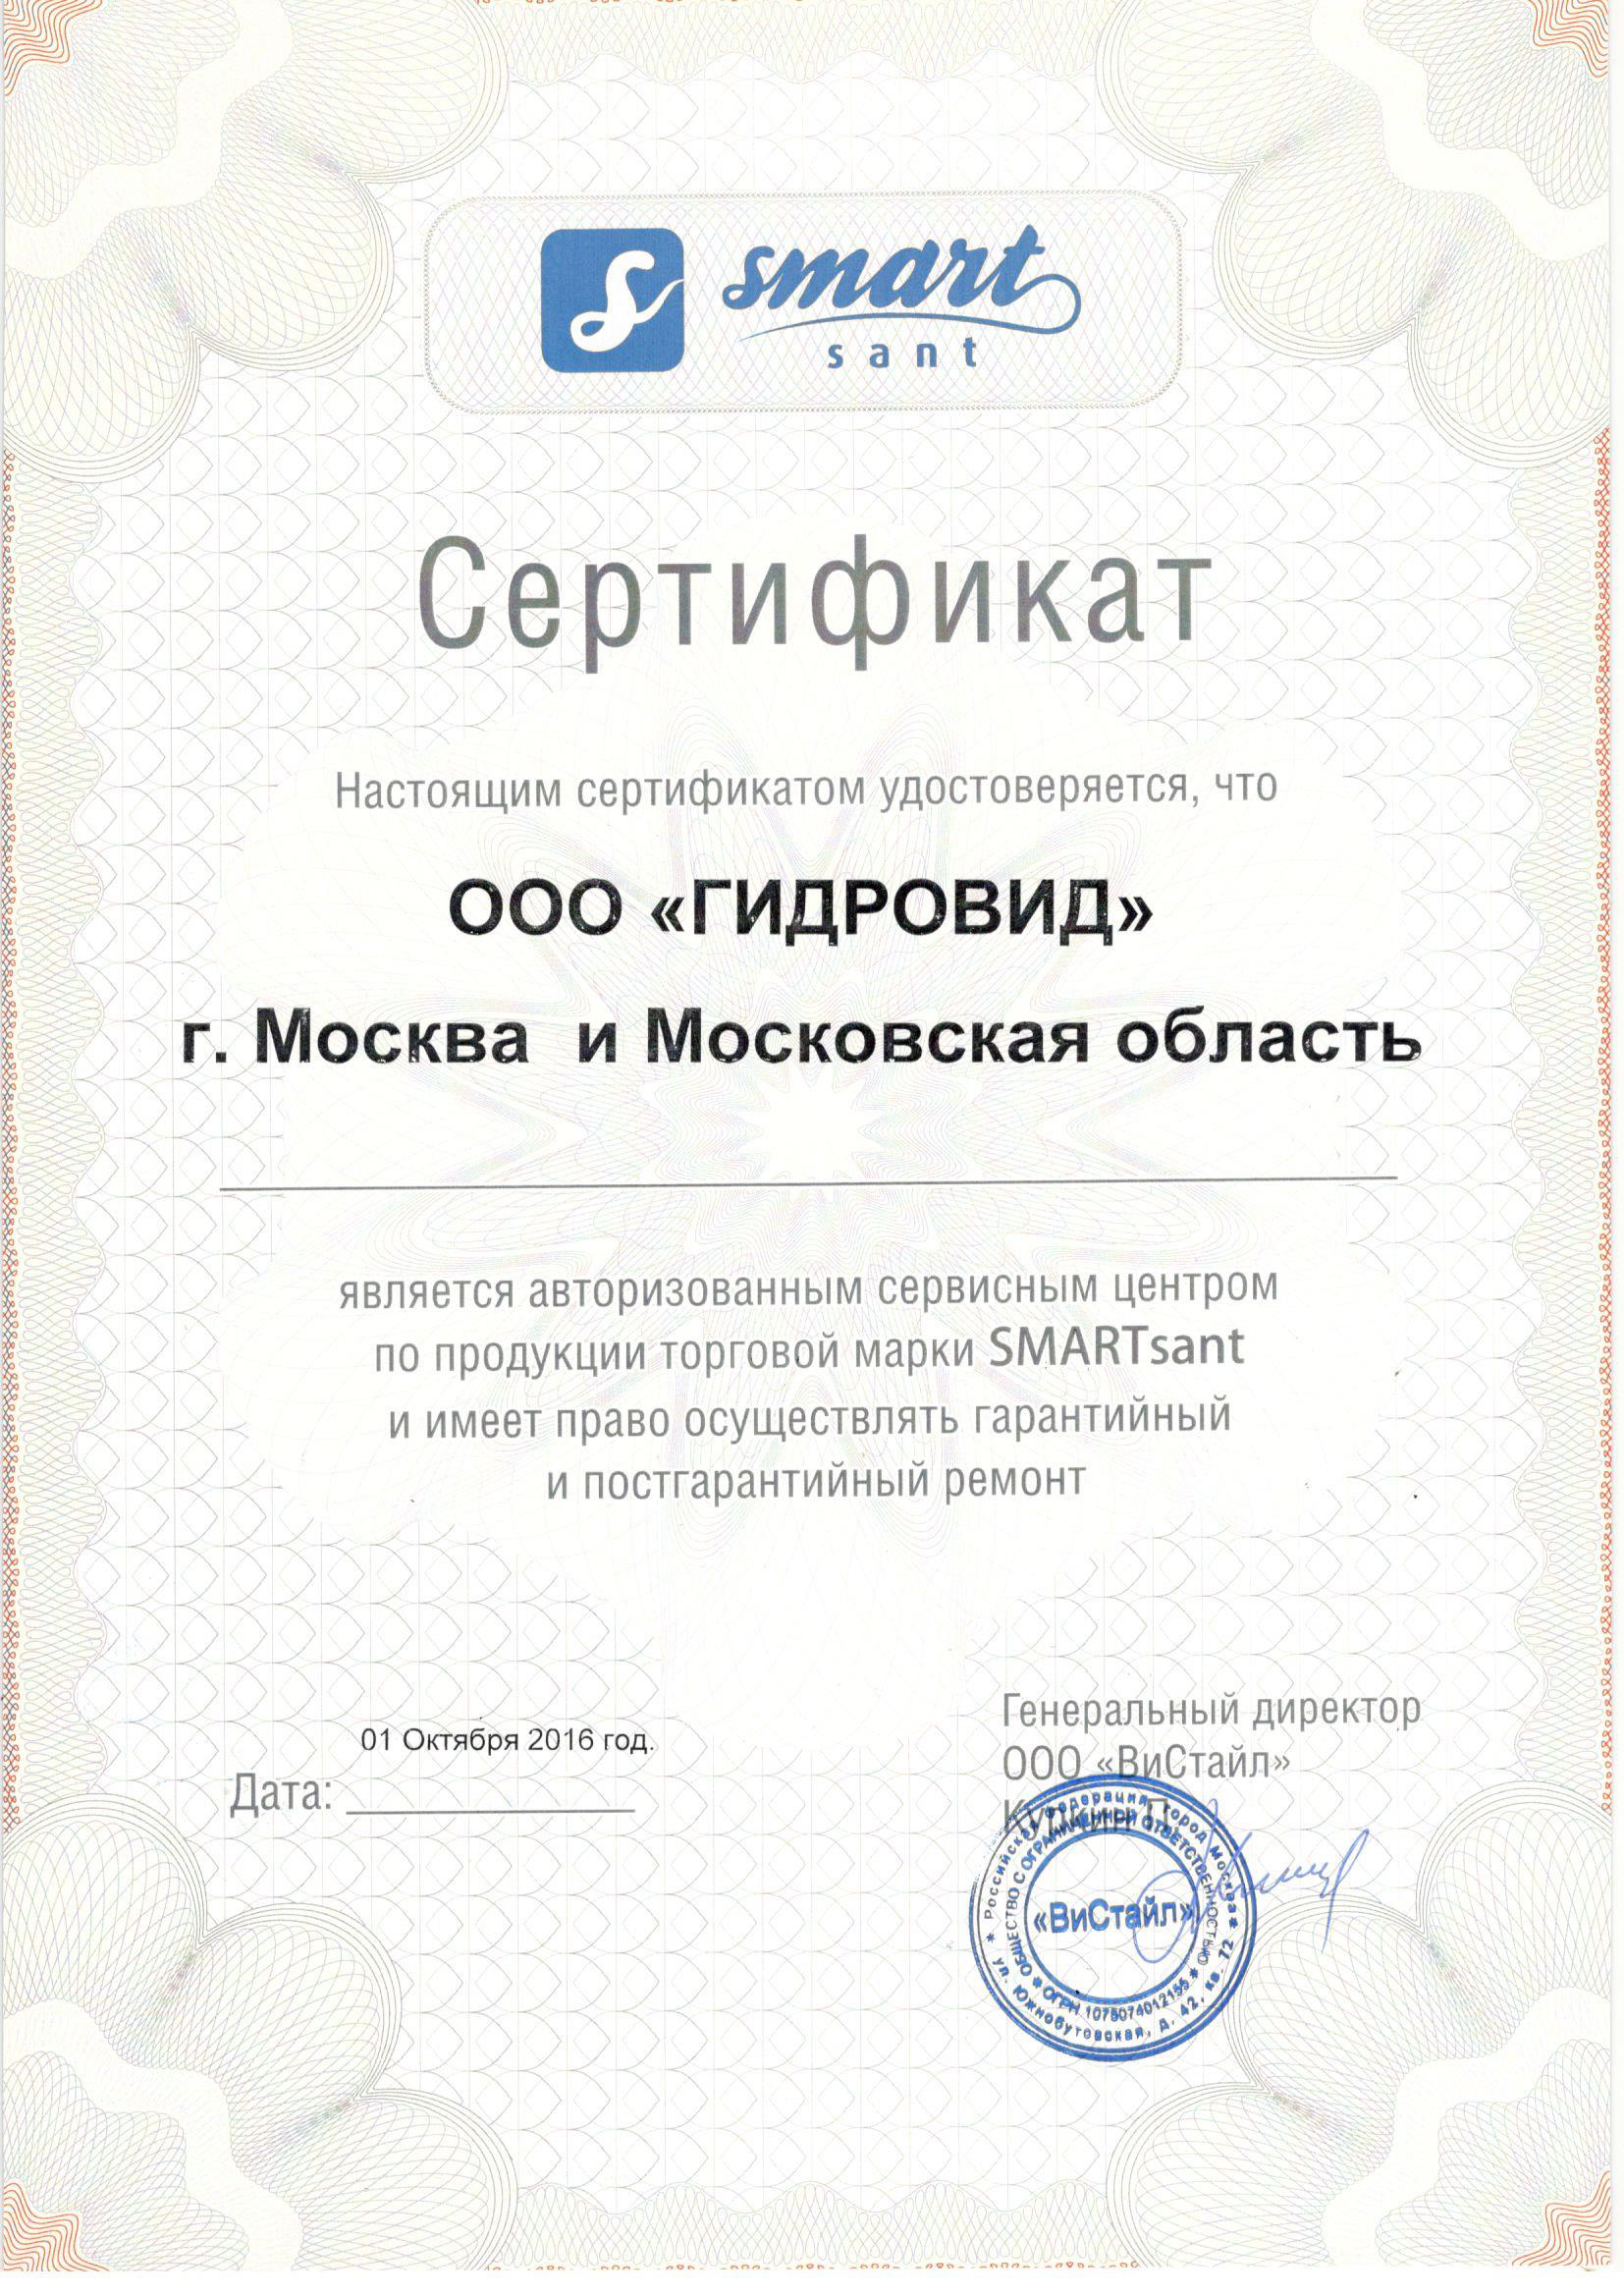 Сертификат Smart Sant